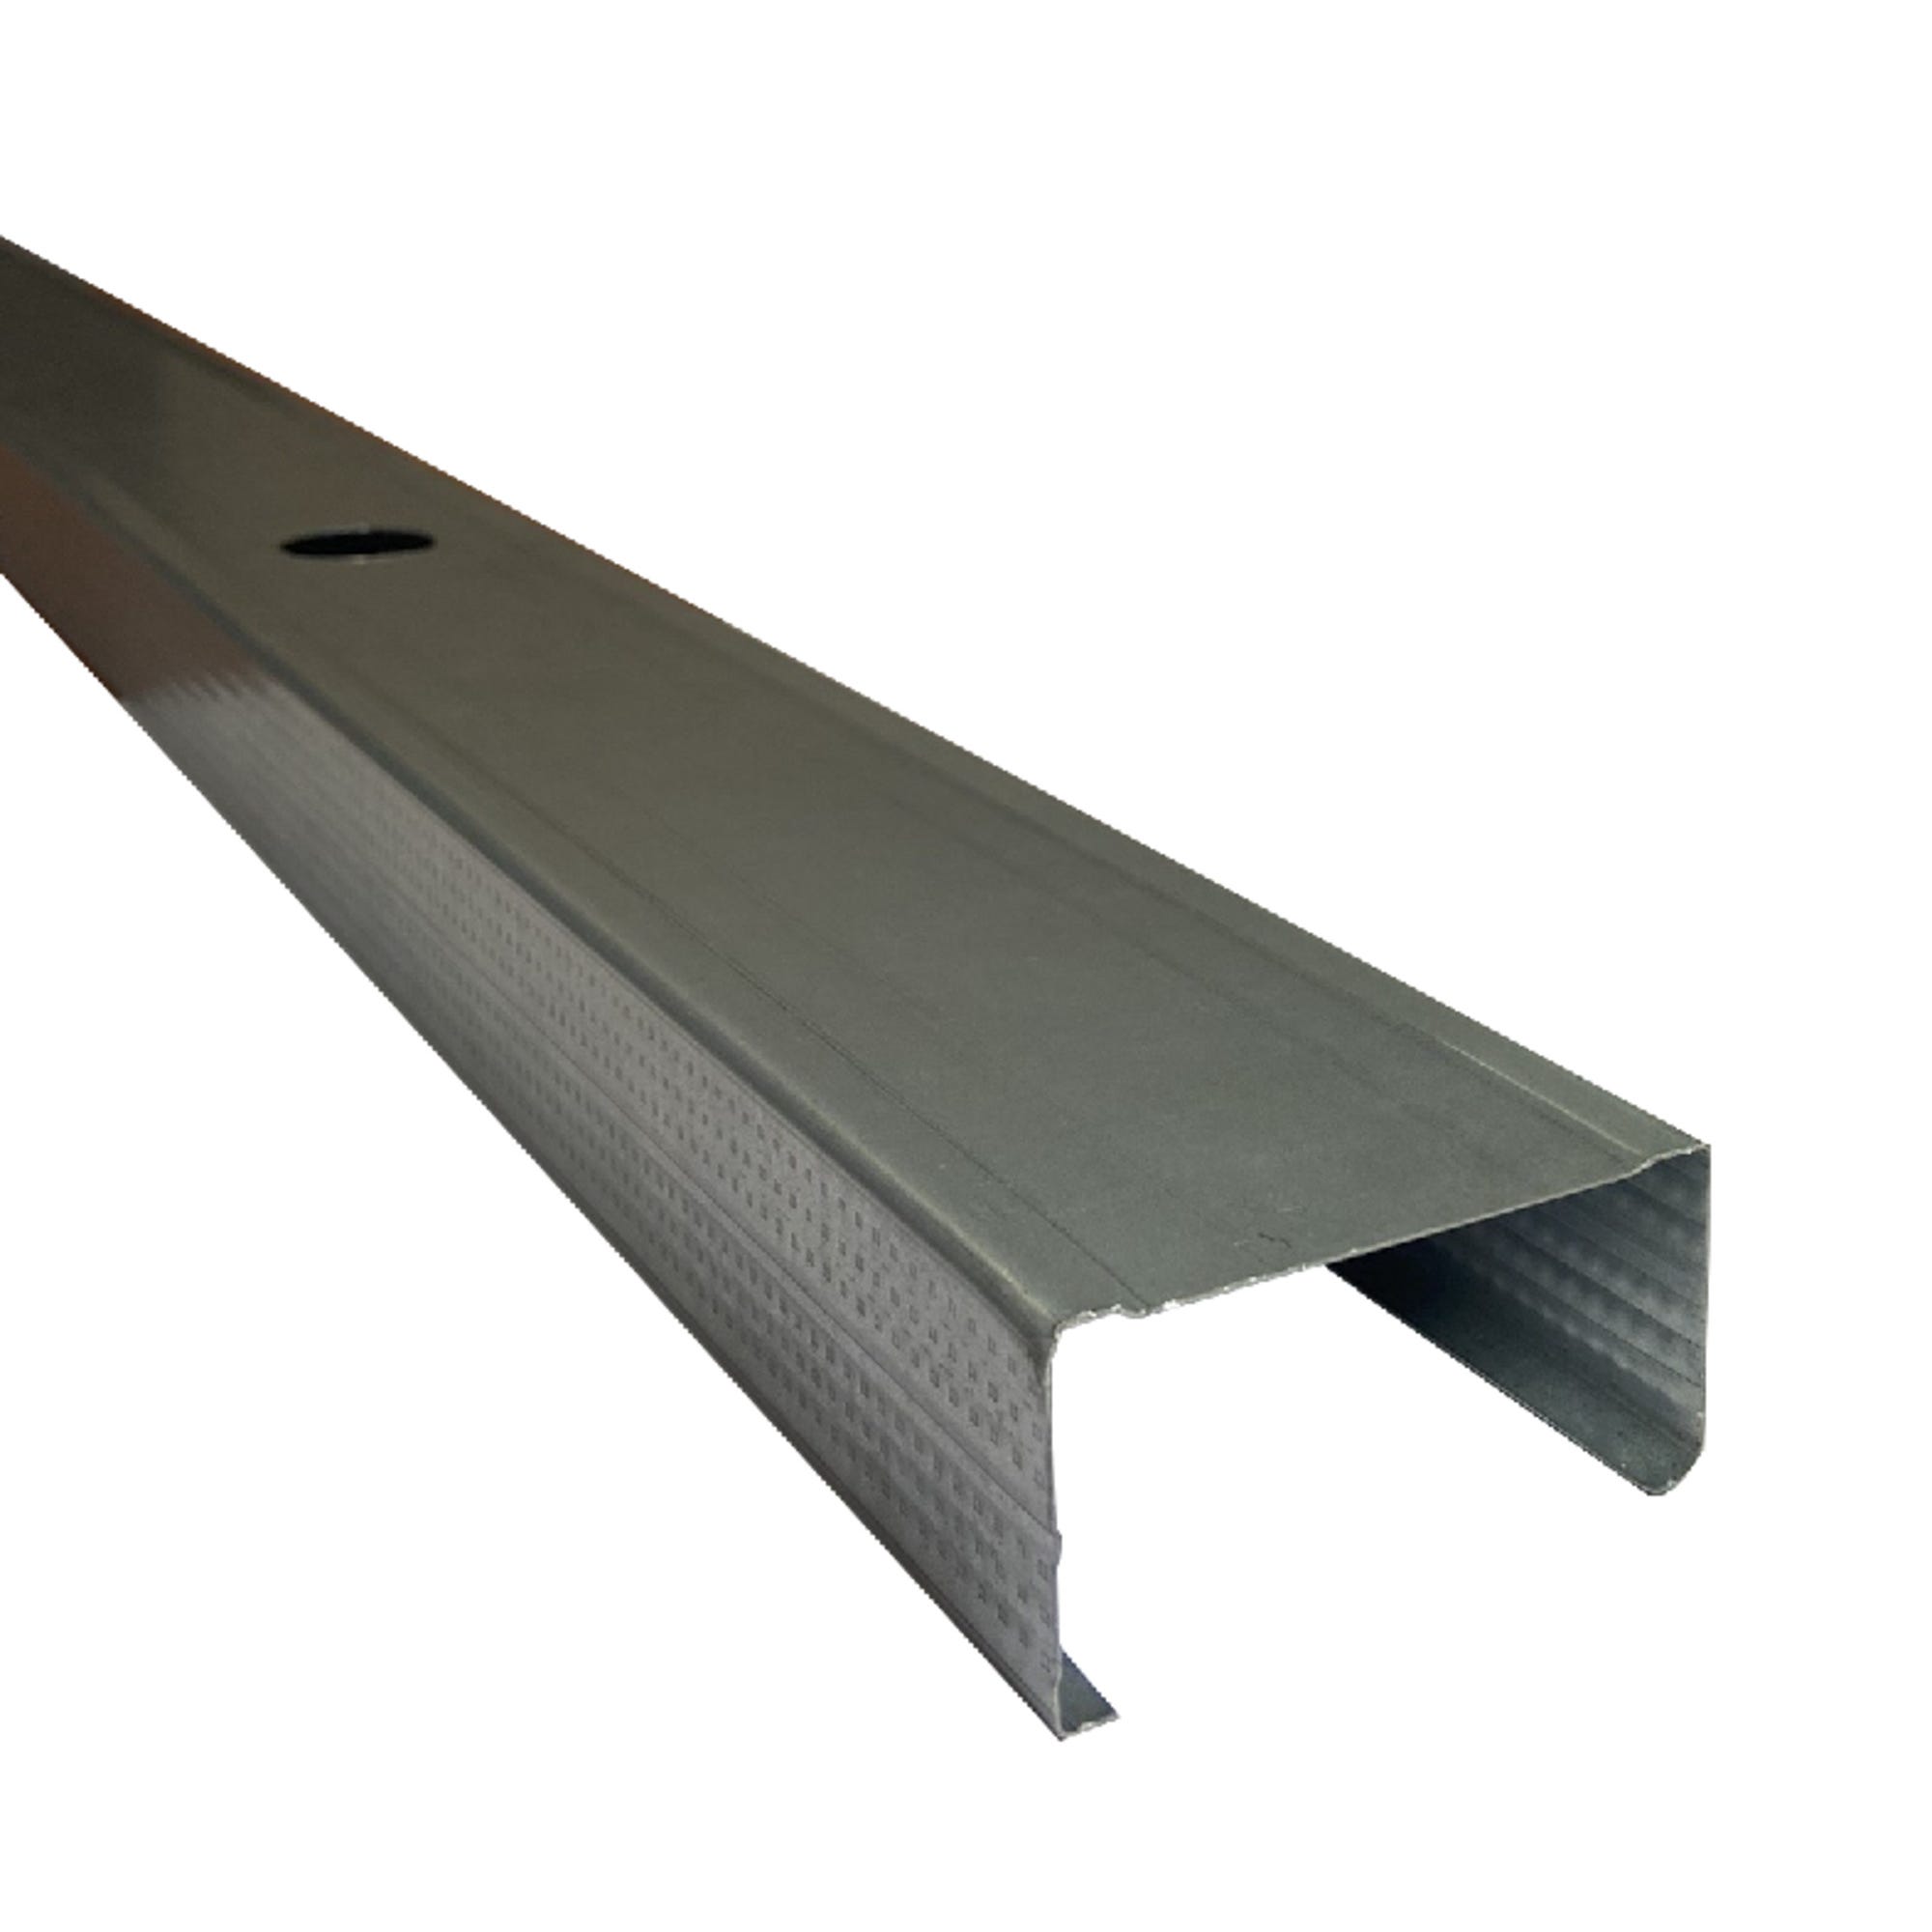 Montant métallique 70/35 mm Long.3 m NF - ISOLPRO 1